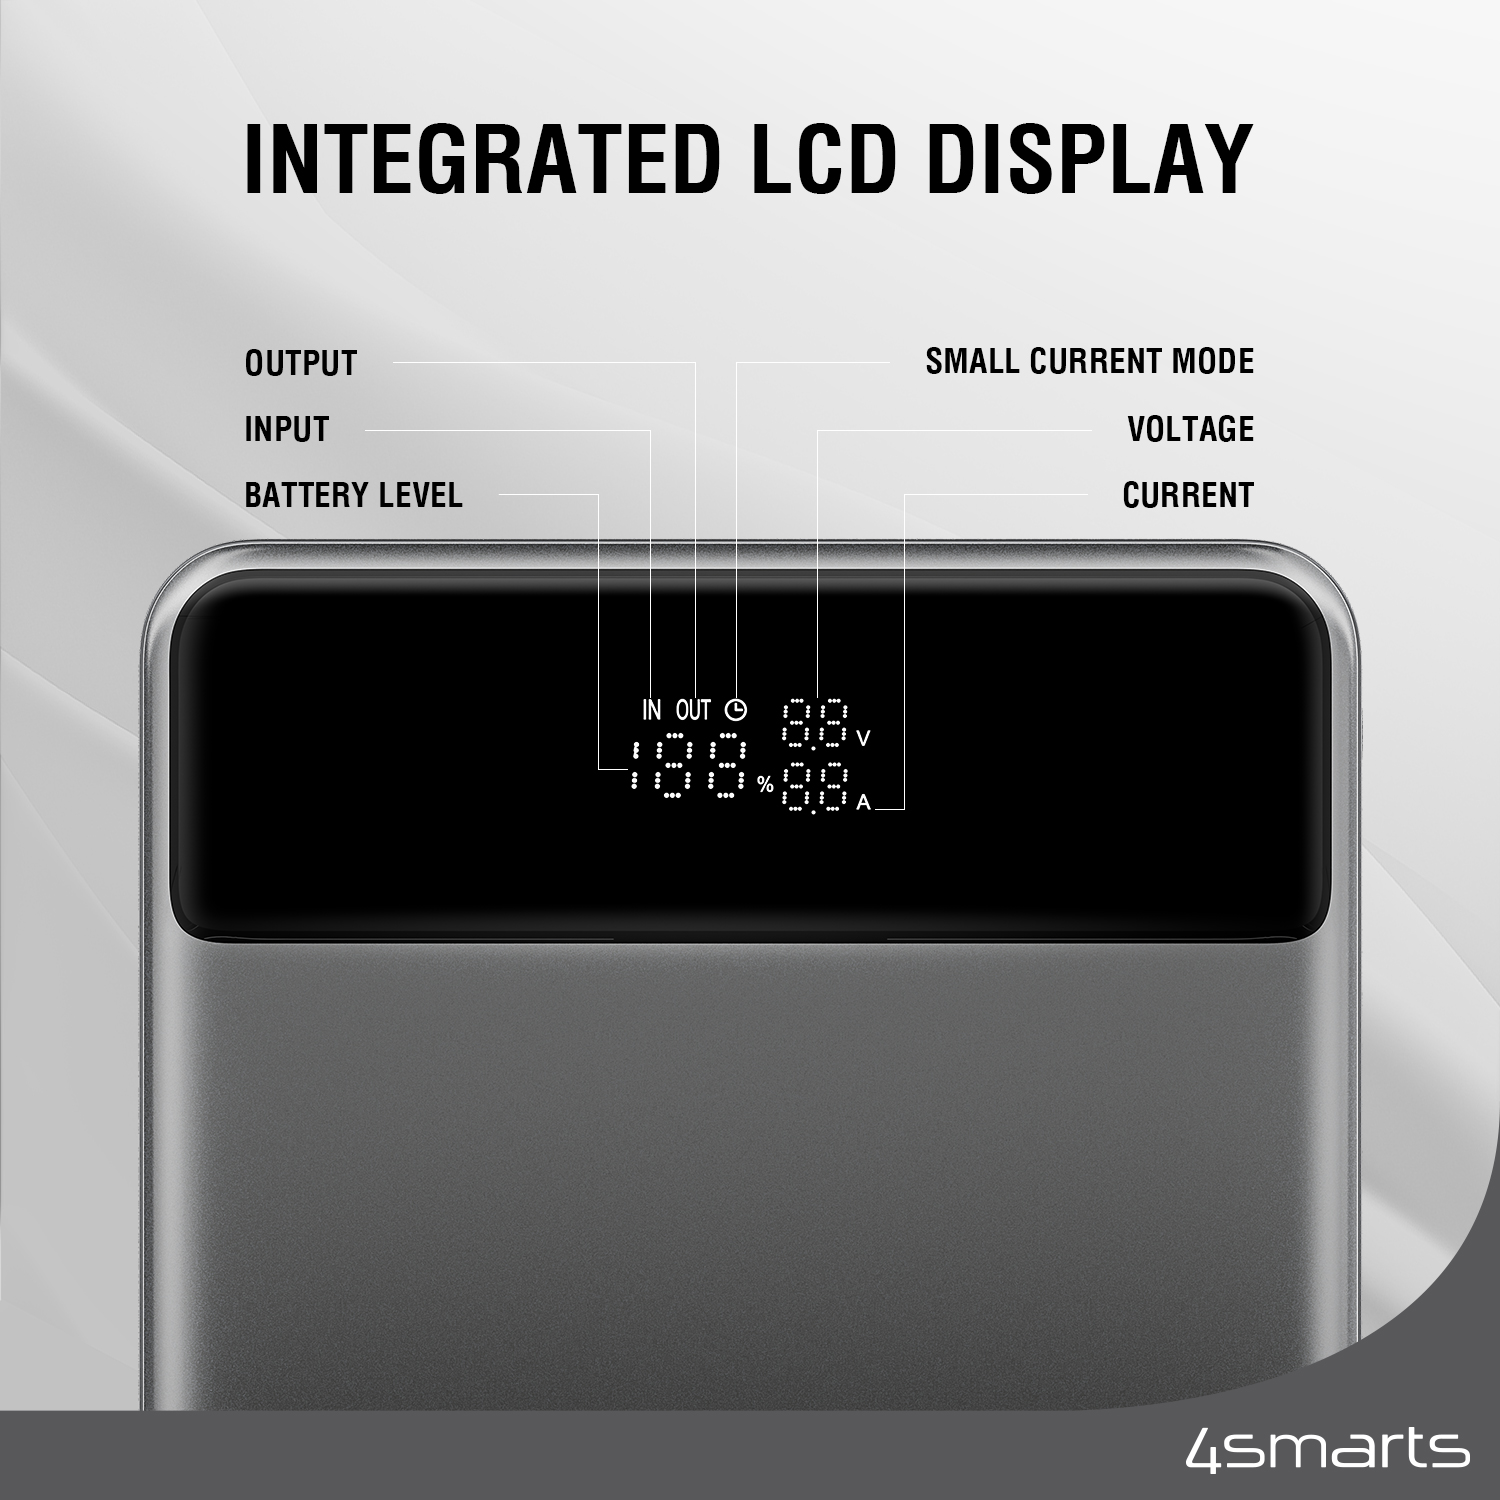 The 4smarts Powerbank Enterprise Slim 20000mAh has an integrated LCD display.